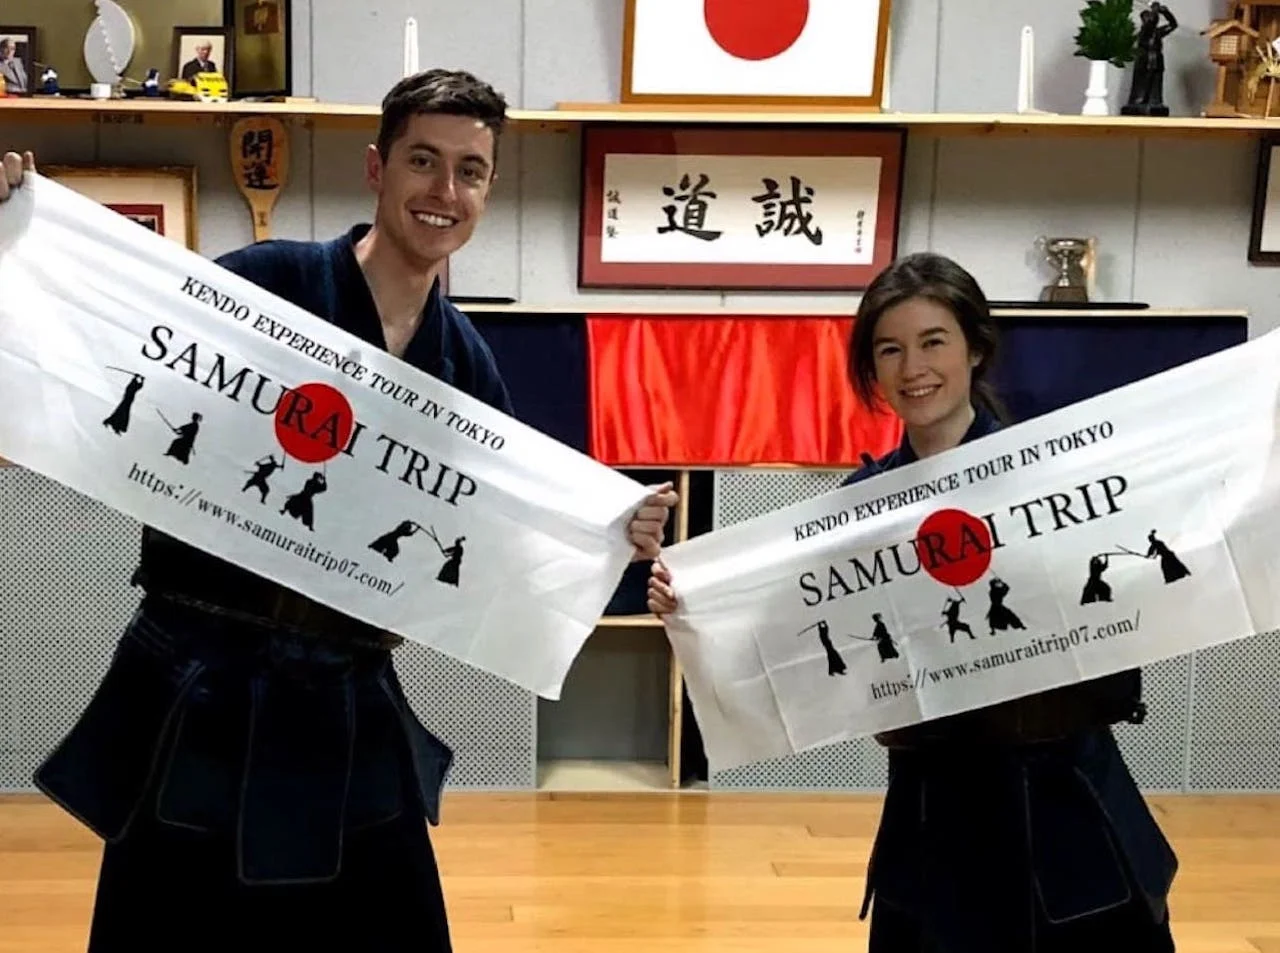 Kendo/Samurai Experience in Okinawa